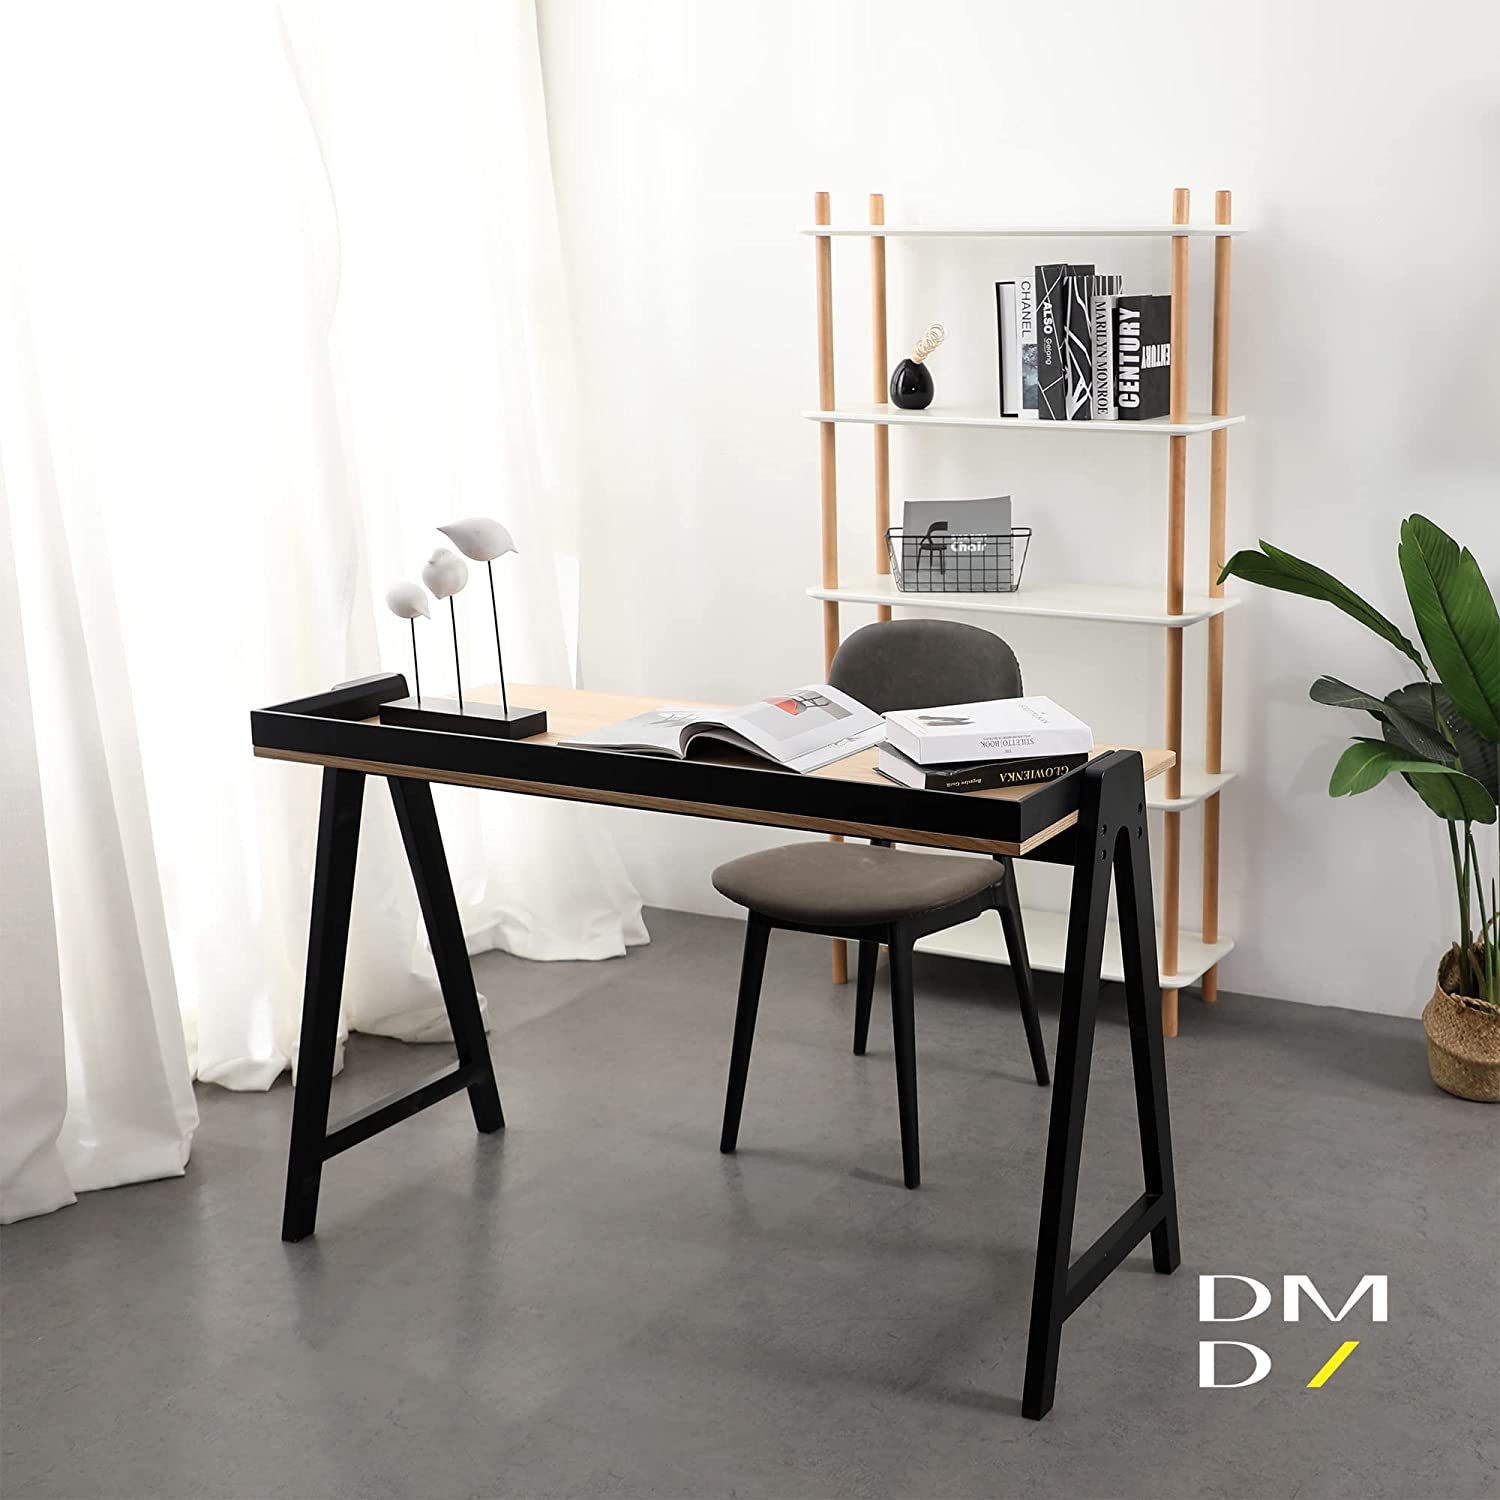 KAI Desk, Modern Nordic Desk, Study desk, Computer Desk, Study Table for home office with Solid Wood Base & Oak Top By Daamudi black office setup